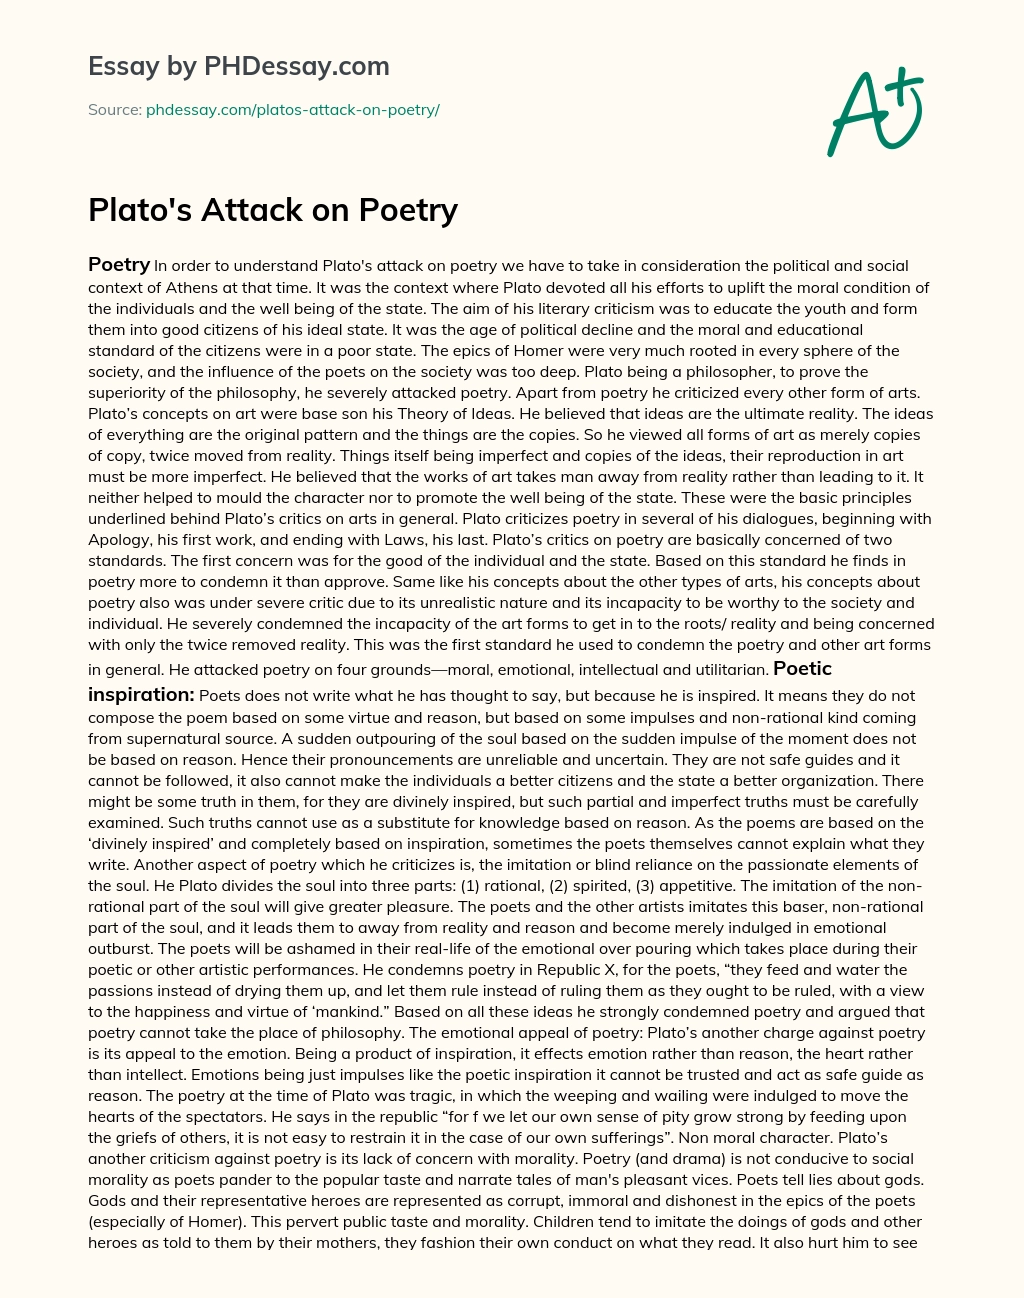 Plato’s Attack on Poetry essay